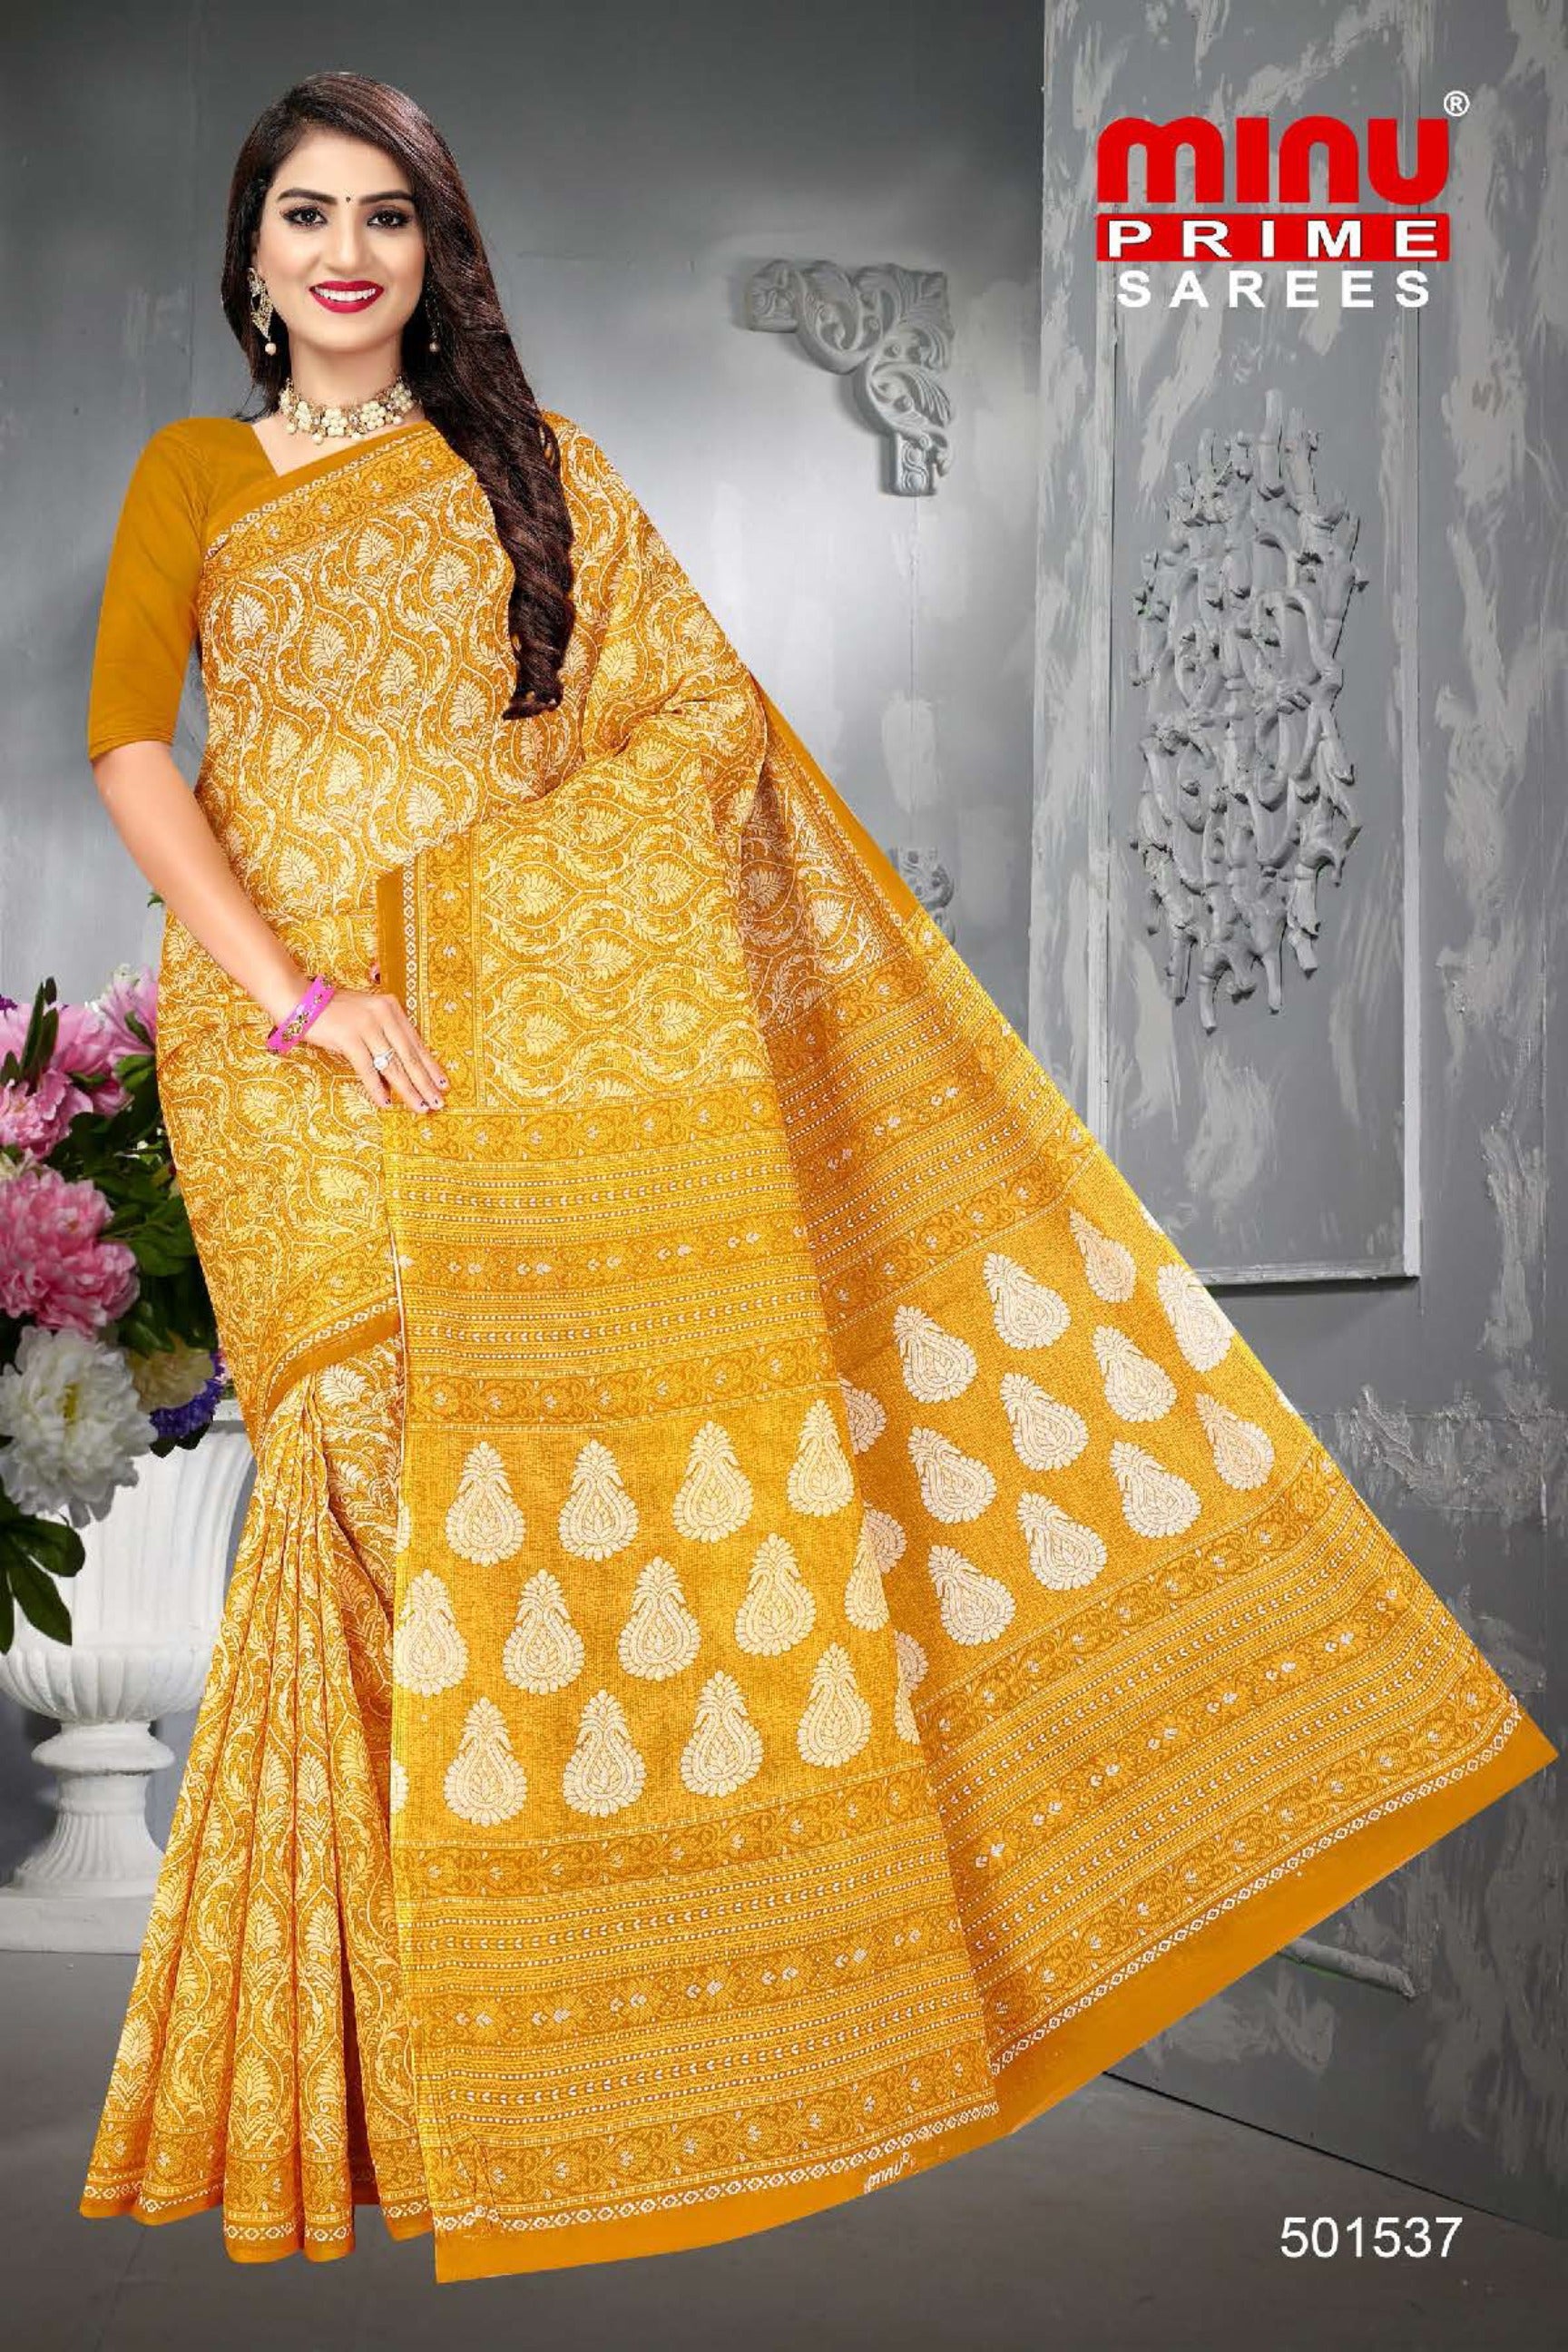 Woman wearing yellow sarees from saree wholesale market